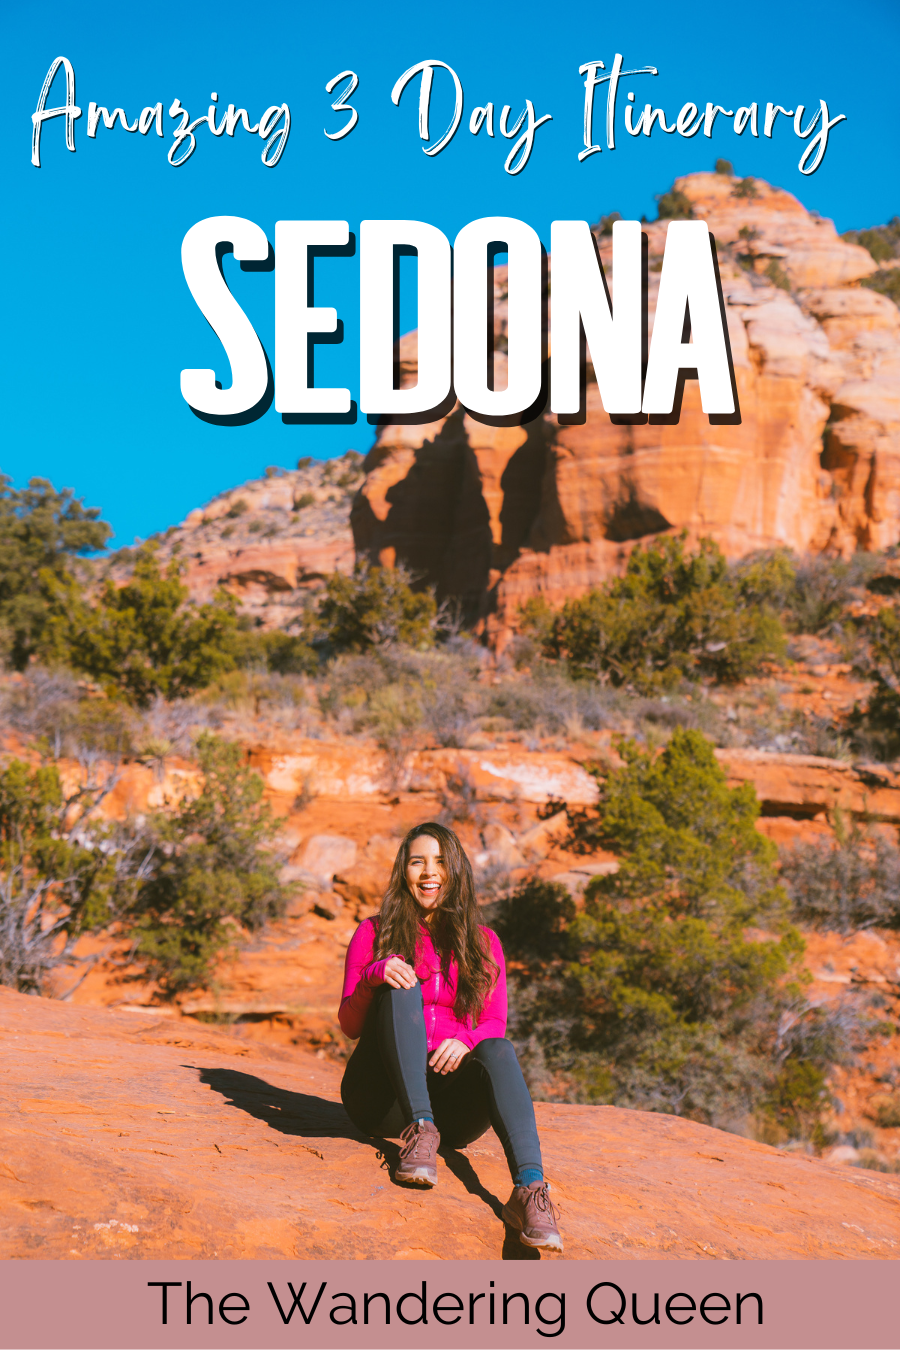 tourist map of sedona arizona